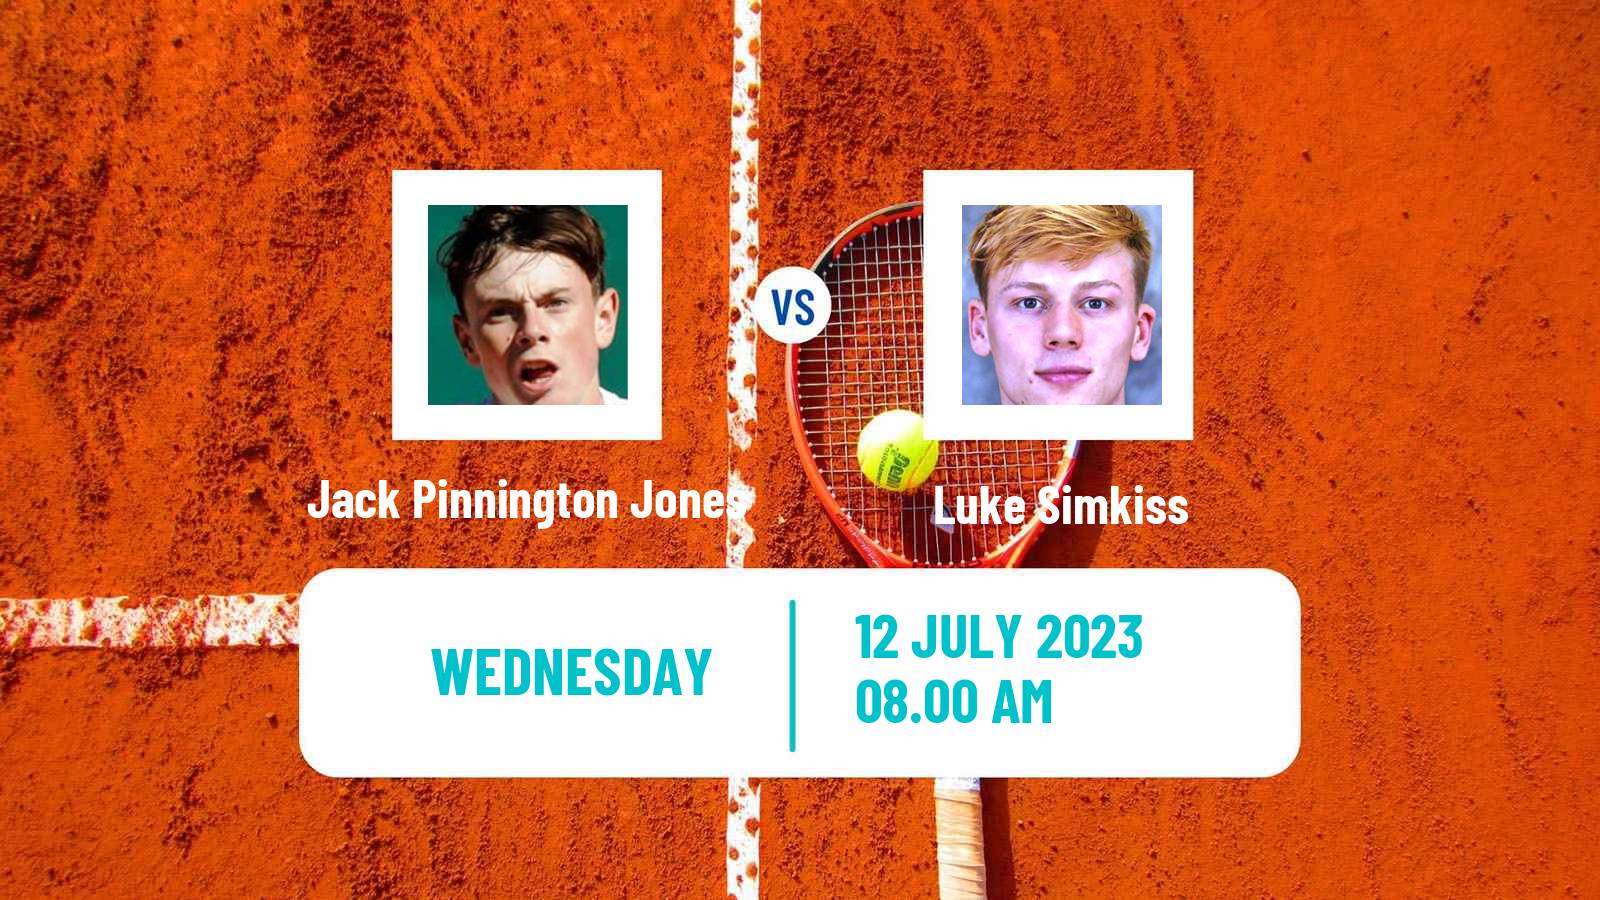 Tennis ITF M25 Nottingham 4 Men Jack Pinnington Jones - Luke Simkiss